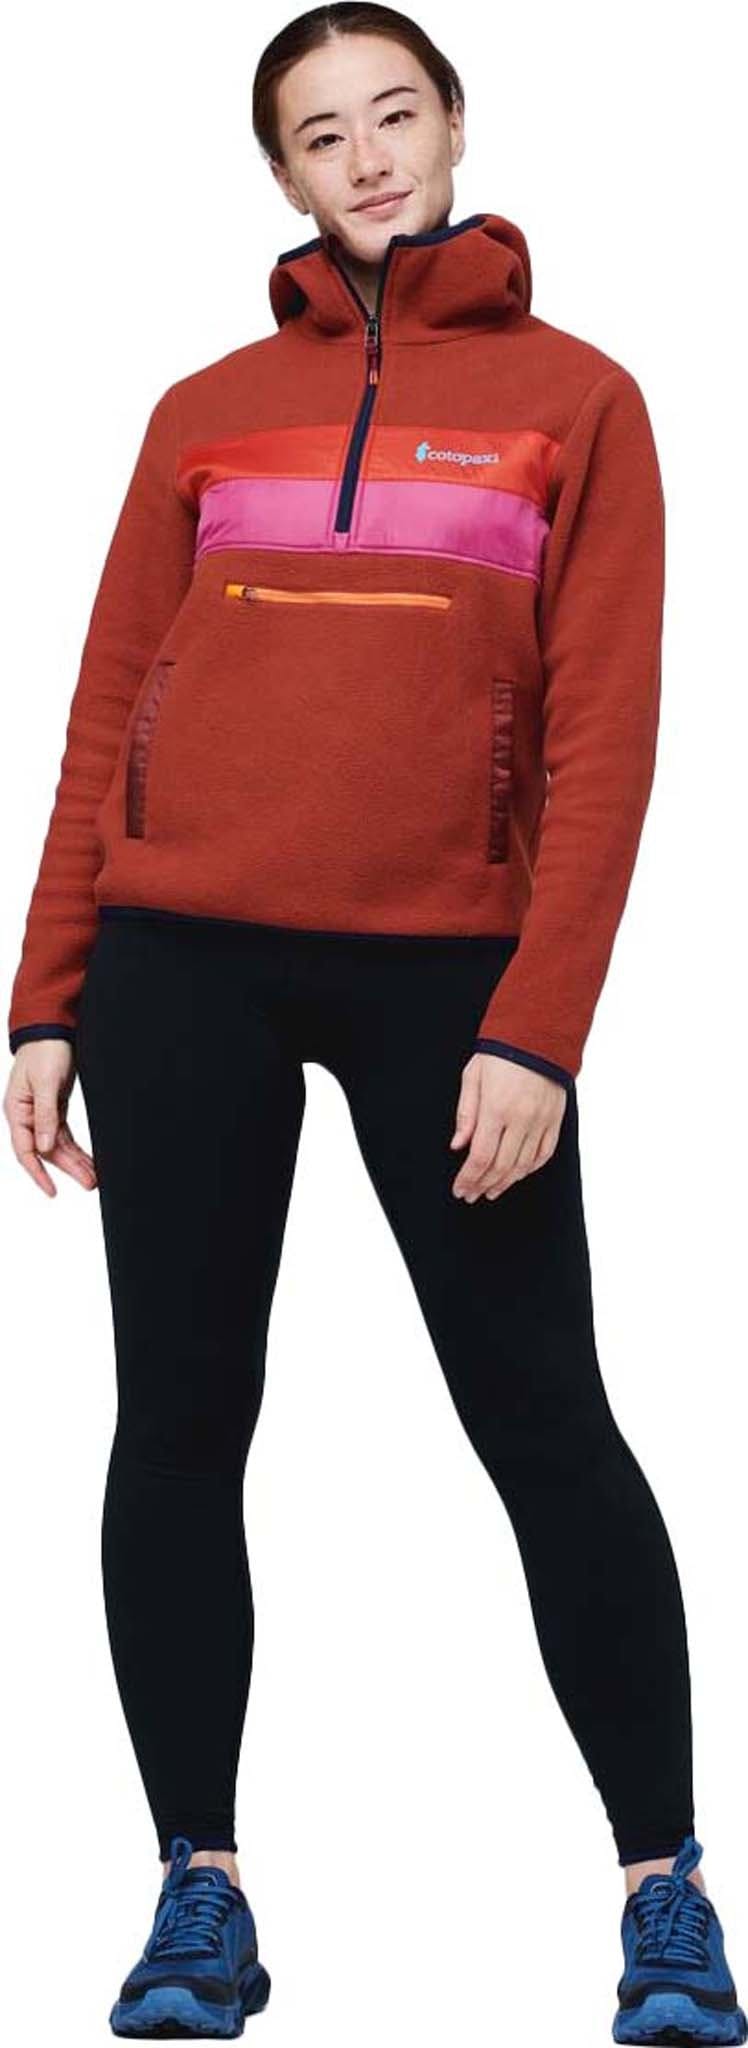 Product gallery image number 3 for product Teca Fleece Hooded Half-Zip Pullover - Women's